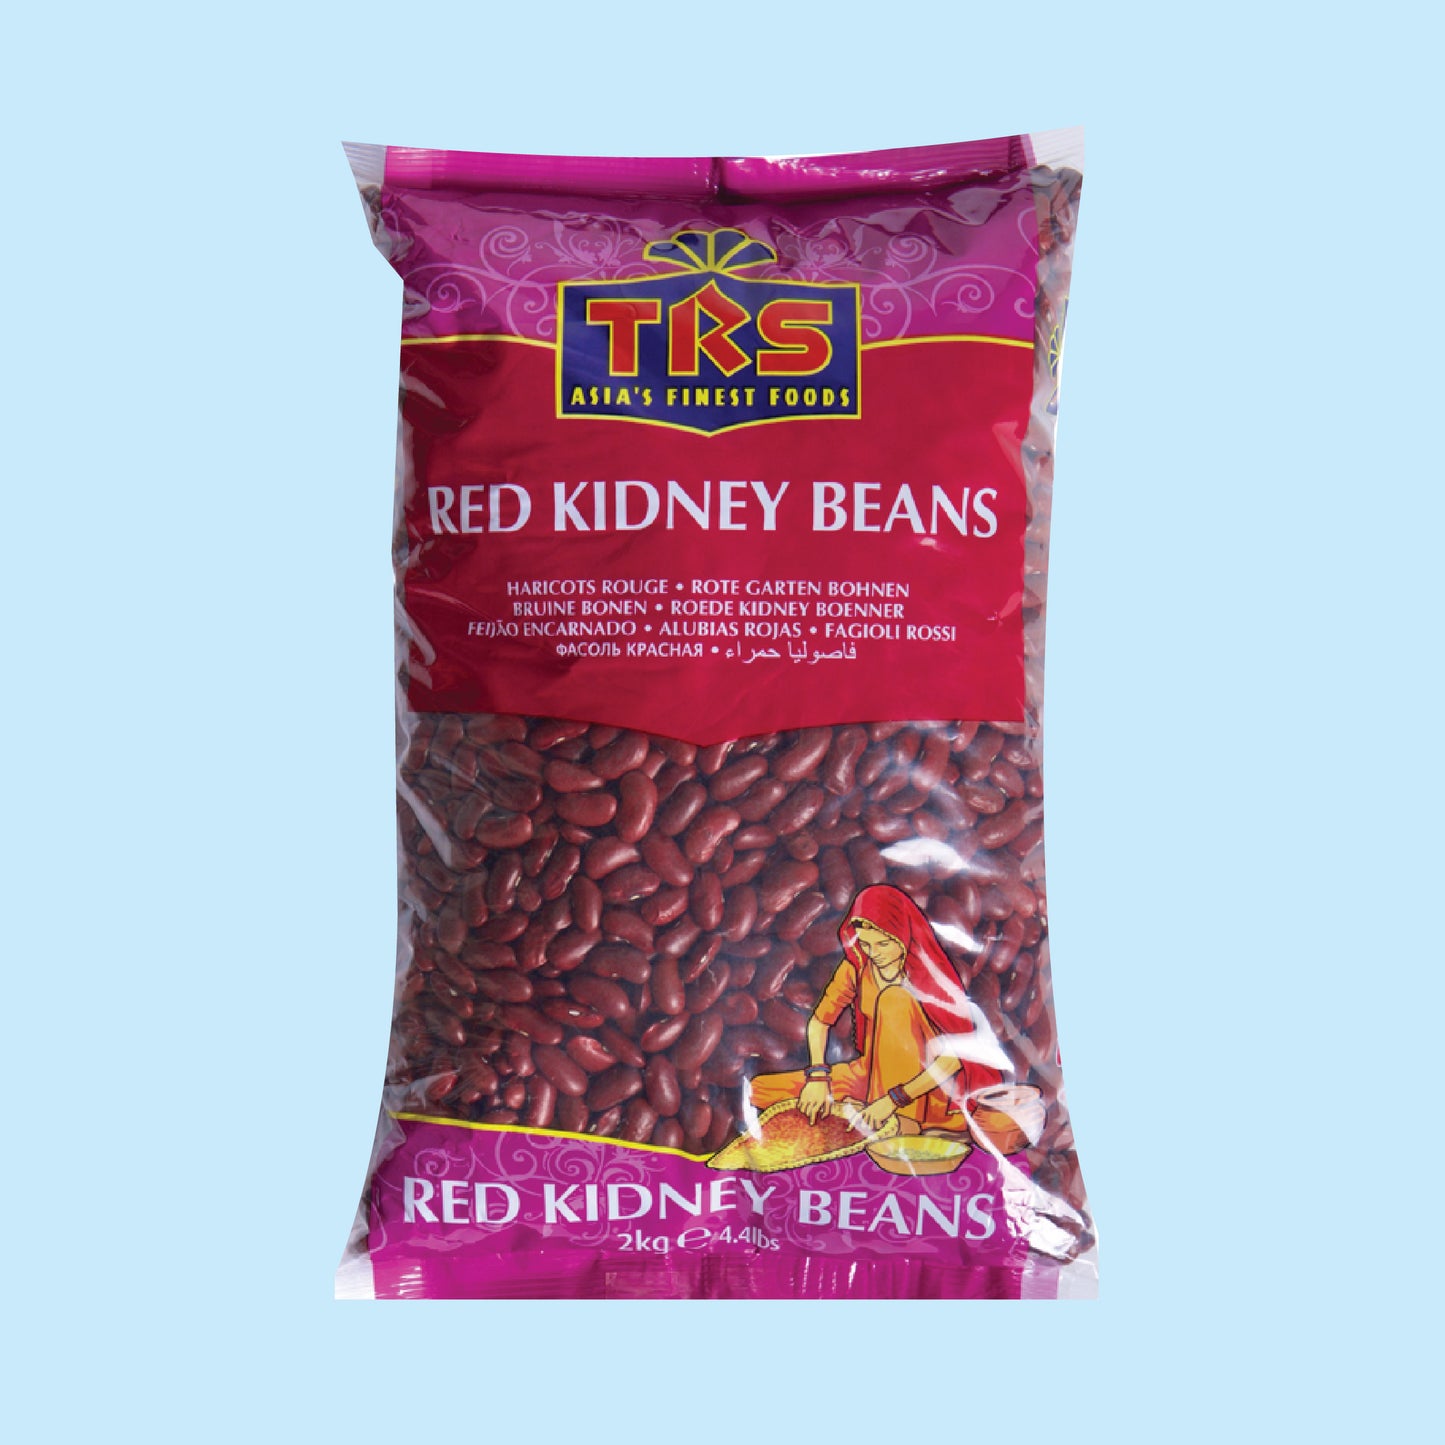 TRS red kidney beans